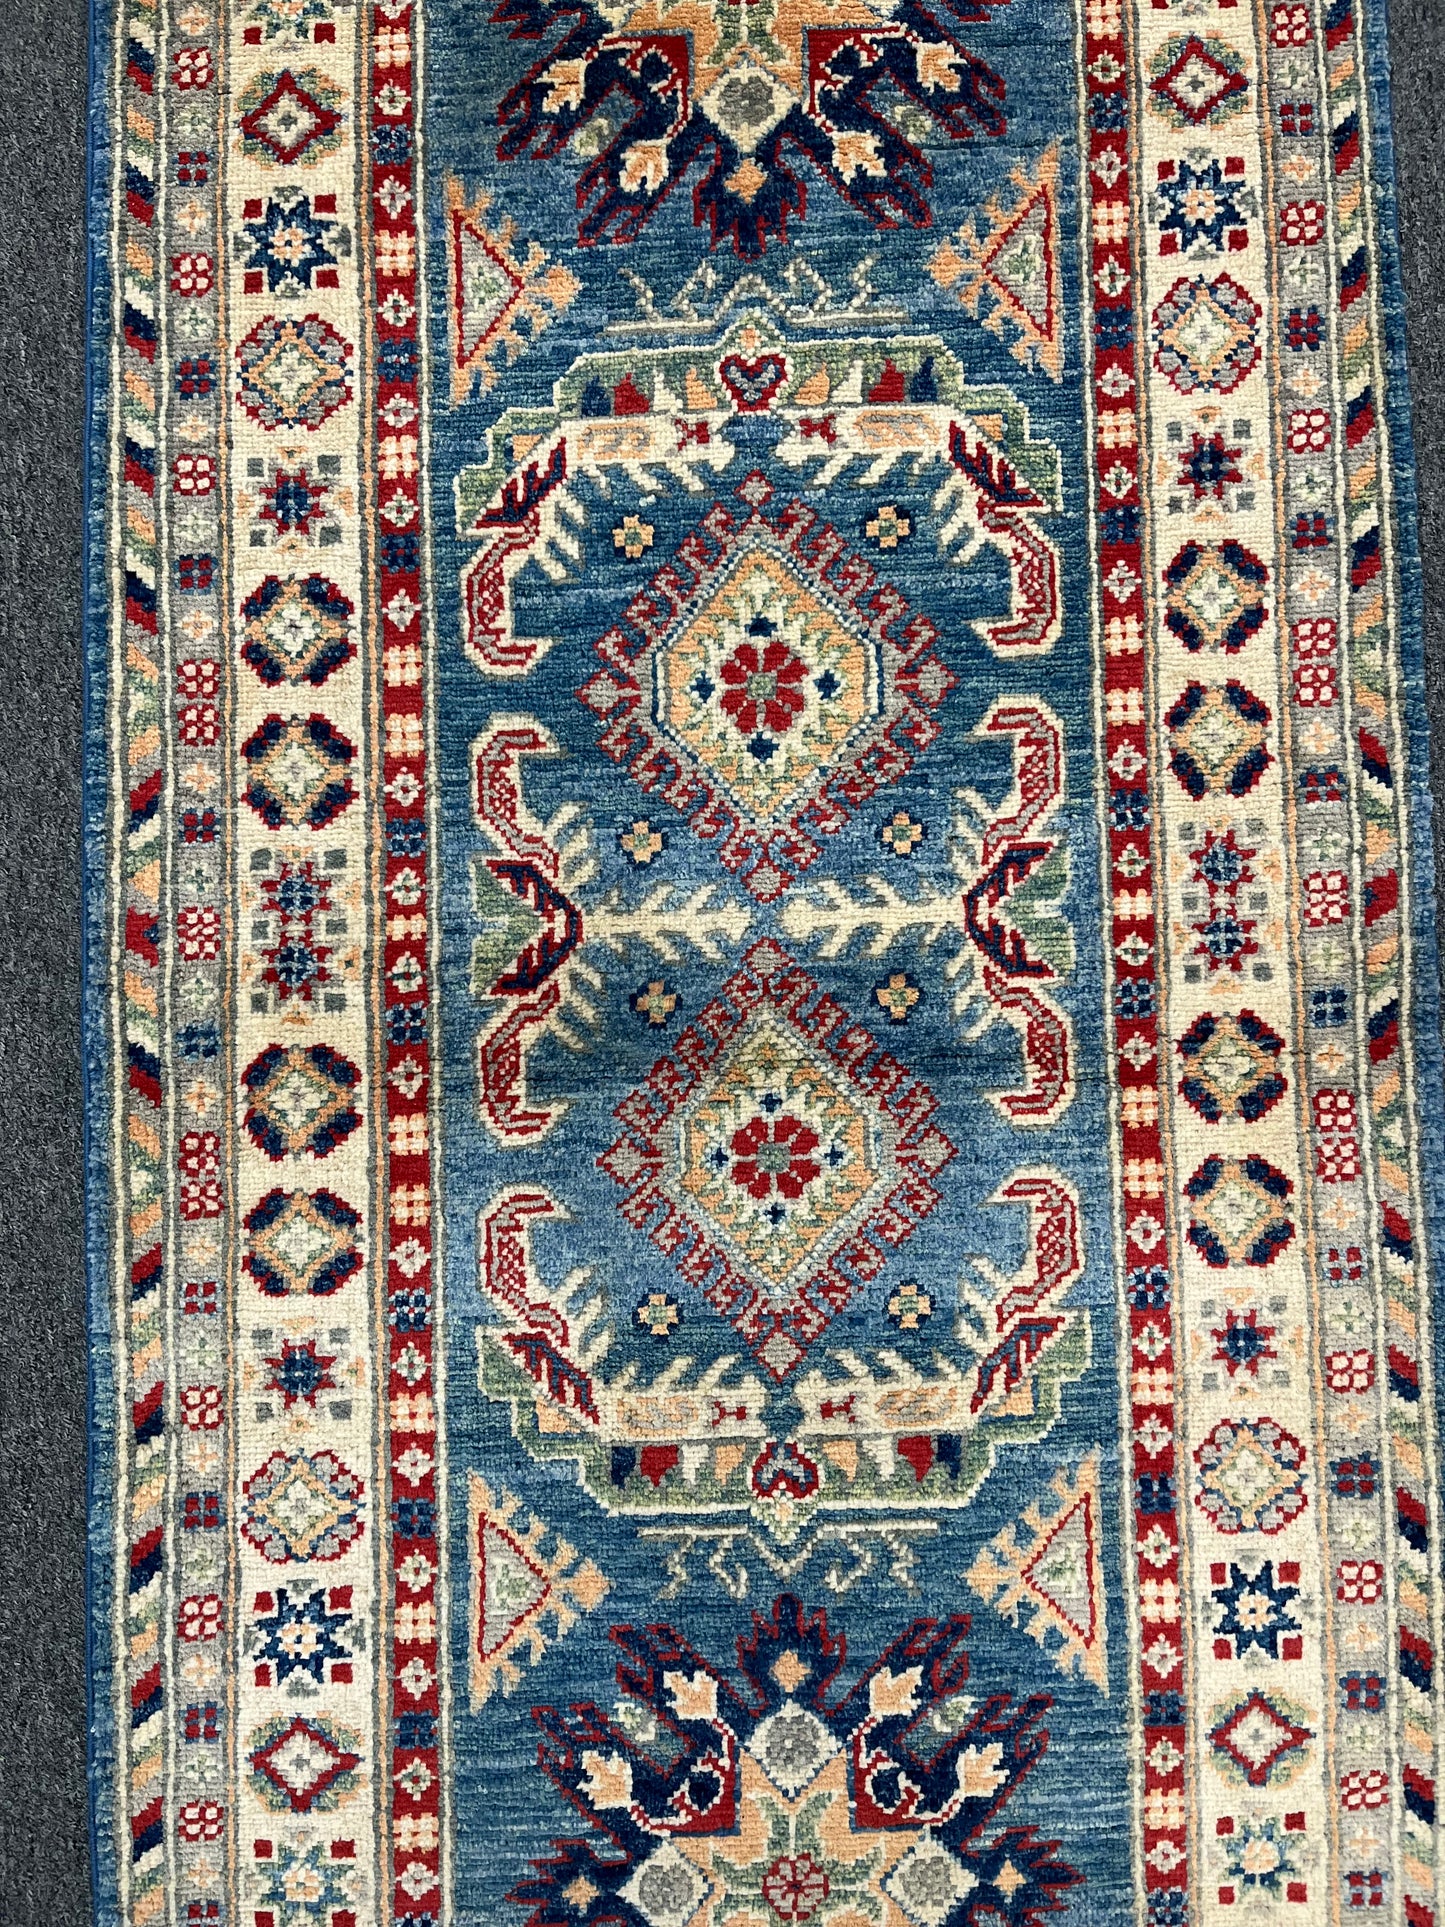 Kazak Runner Light Blue 2' 8"X8' Handmade Wool Rug # 13732